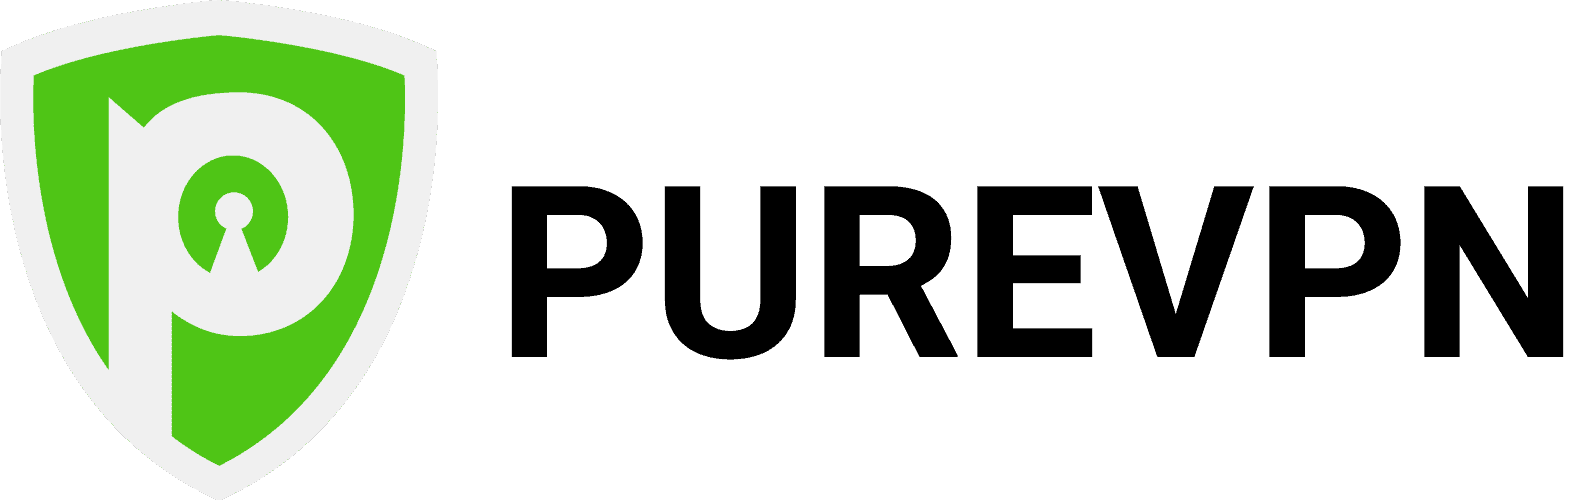 purevpn-logo-flat.png